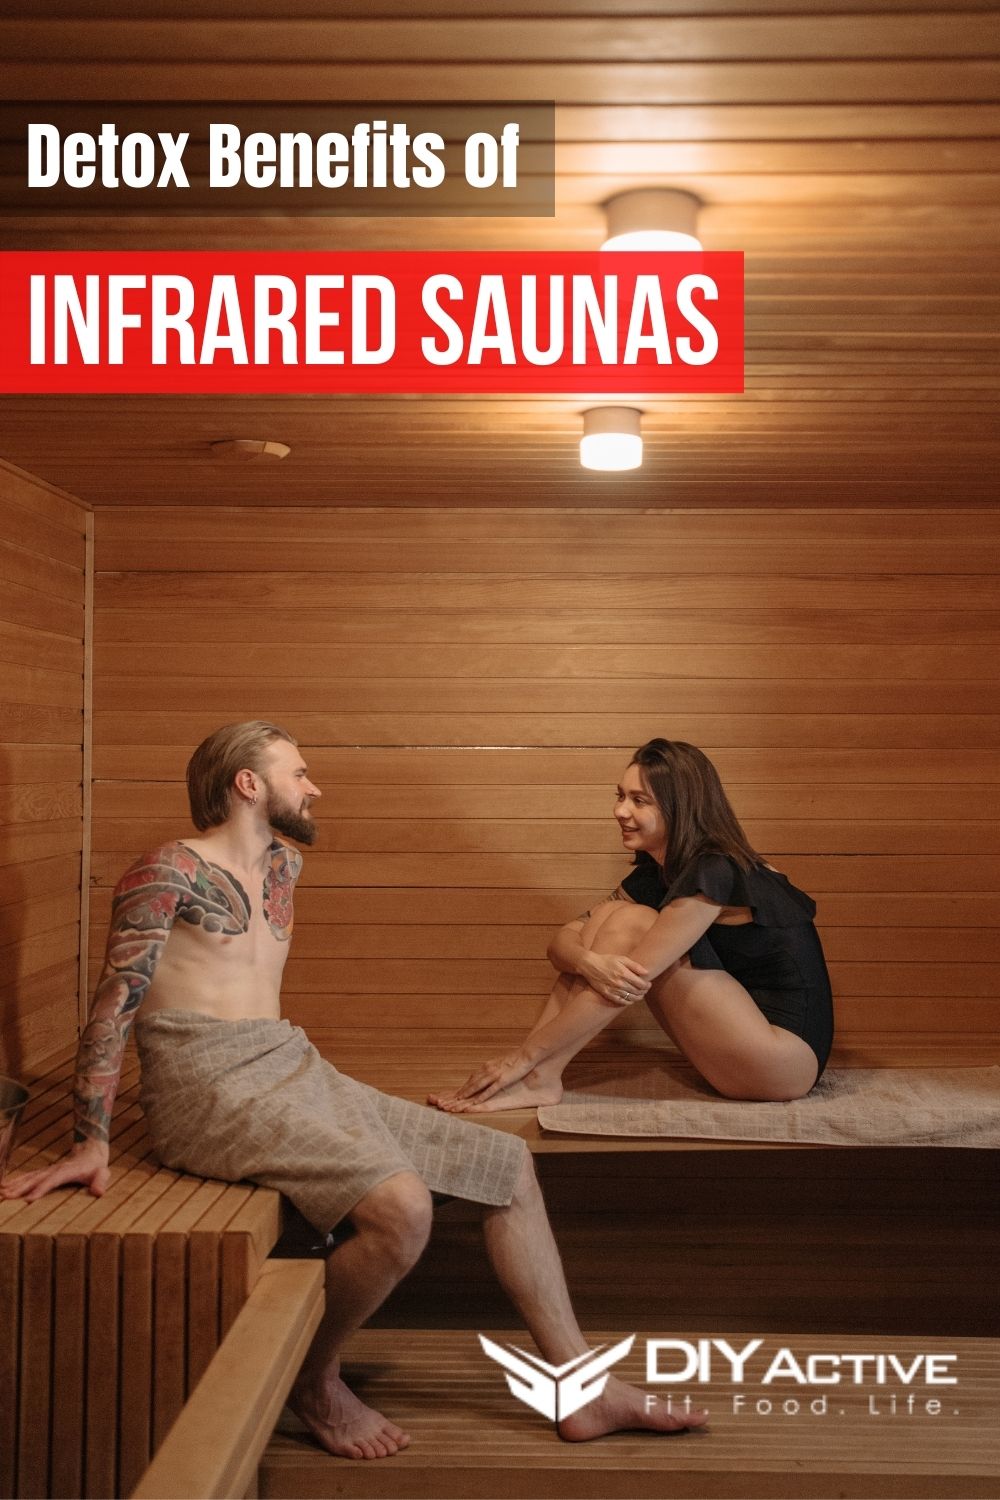 Detox Benefits of Infrared Saunas